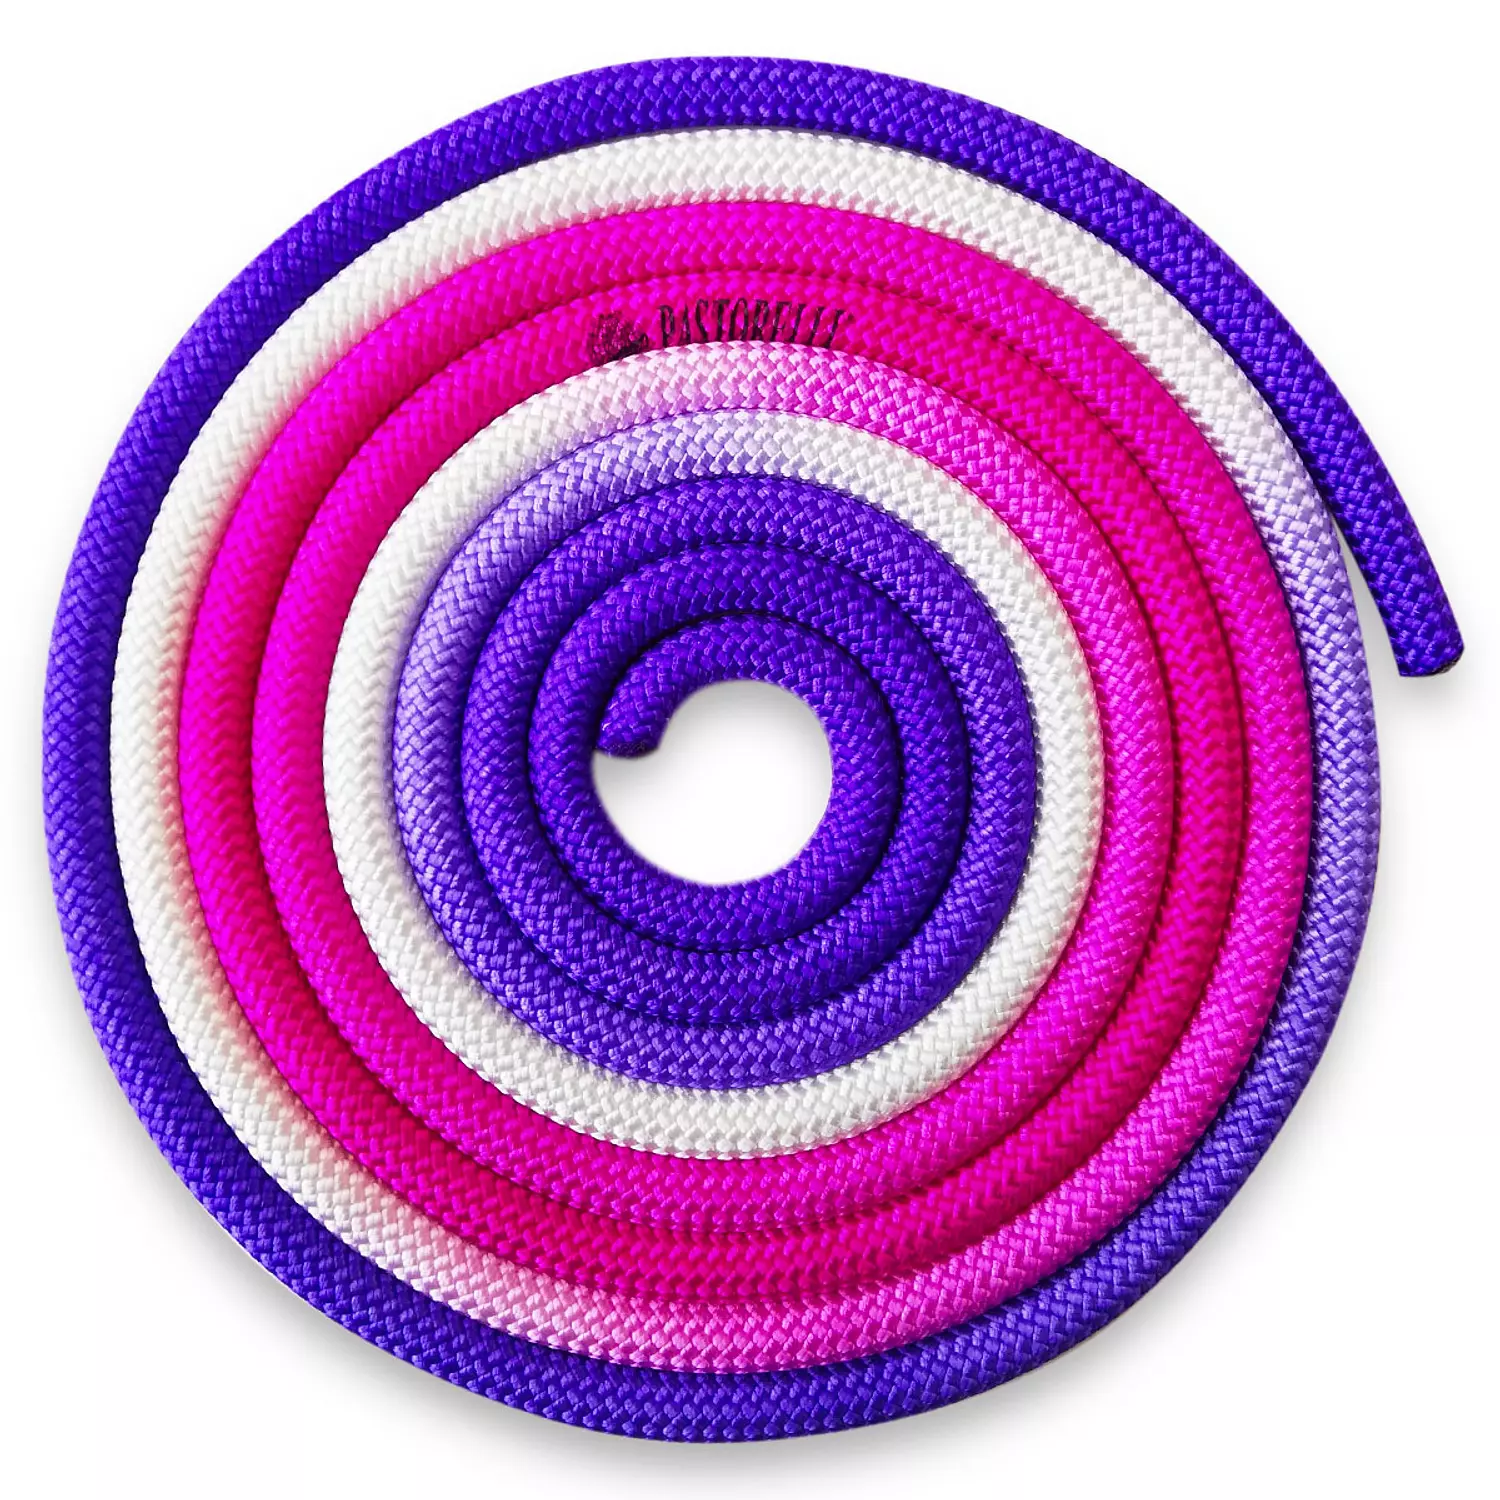 Pastorelli-New Orleans multicolor rope FIG 3m 6